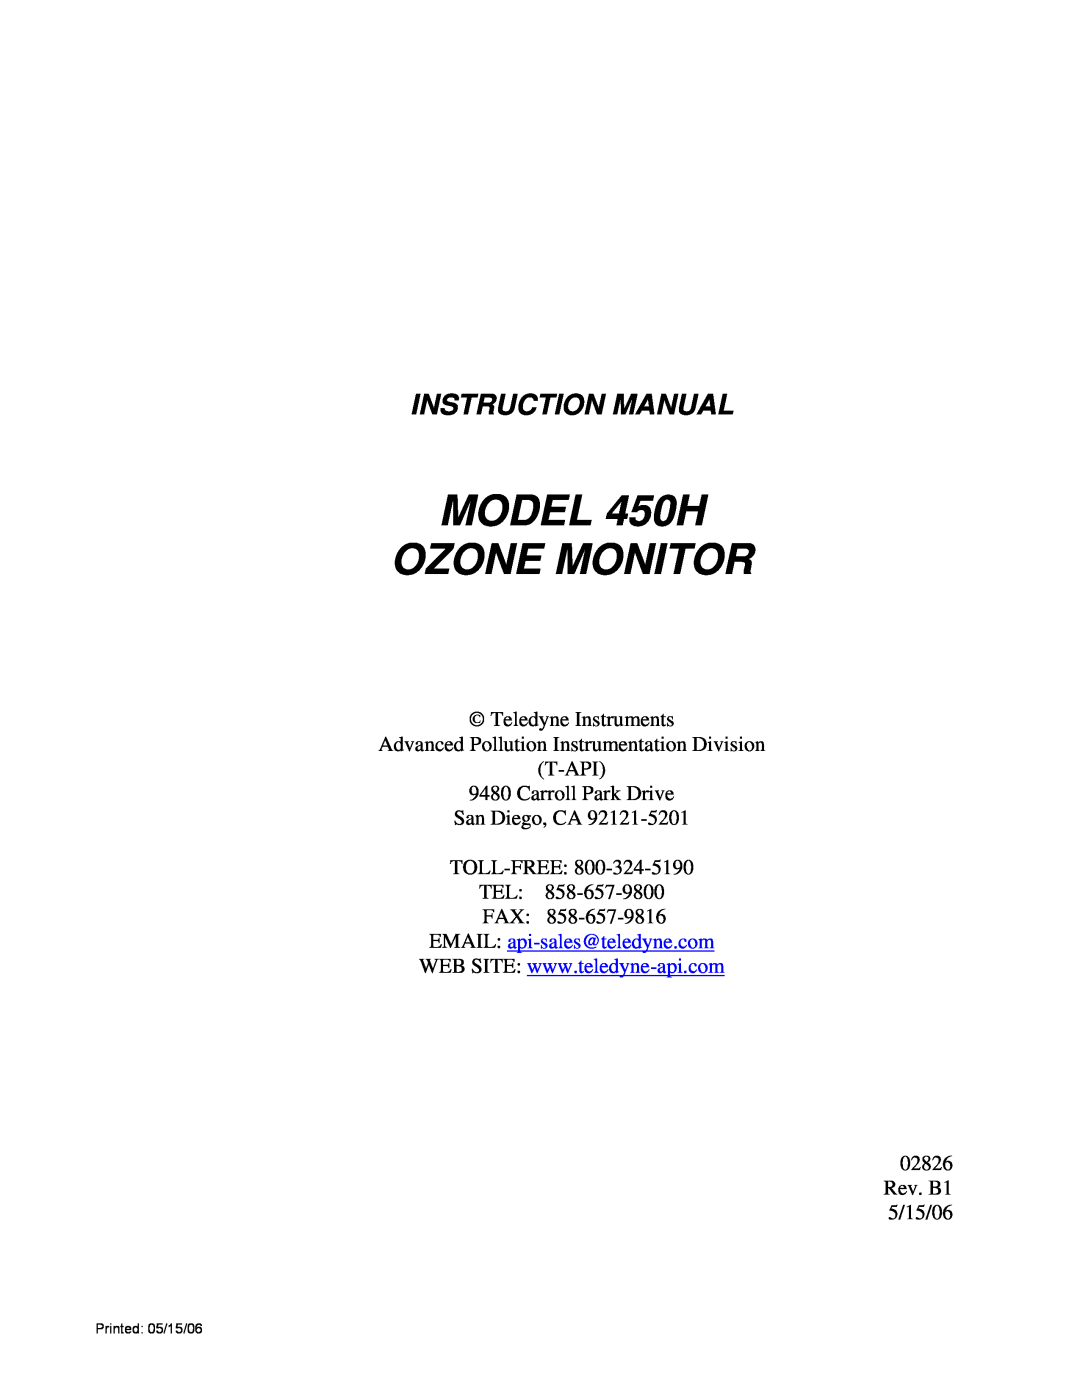 Teledyne instruction manual MODEL 450H OZONE MONITOR, EMAIL api-sales@teledyne.com, Printed 05/15/06 